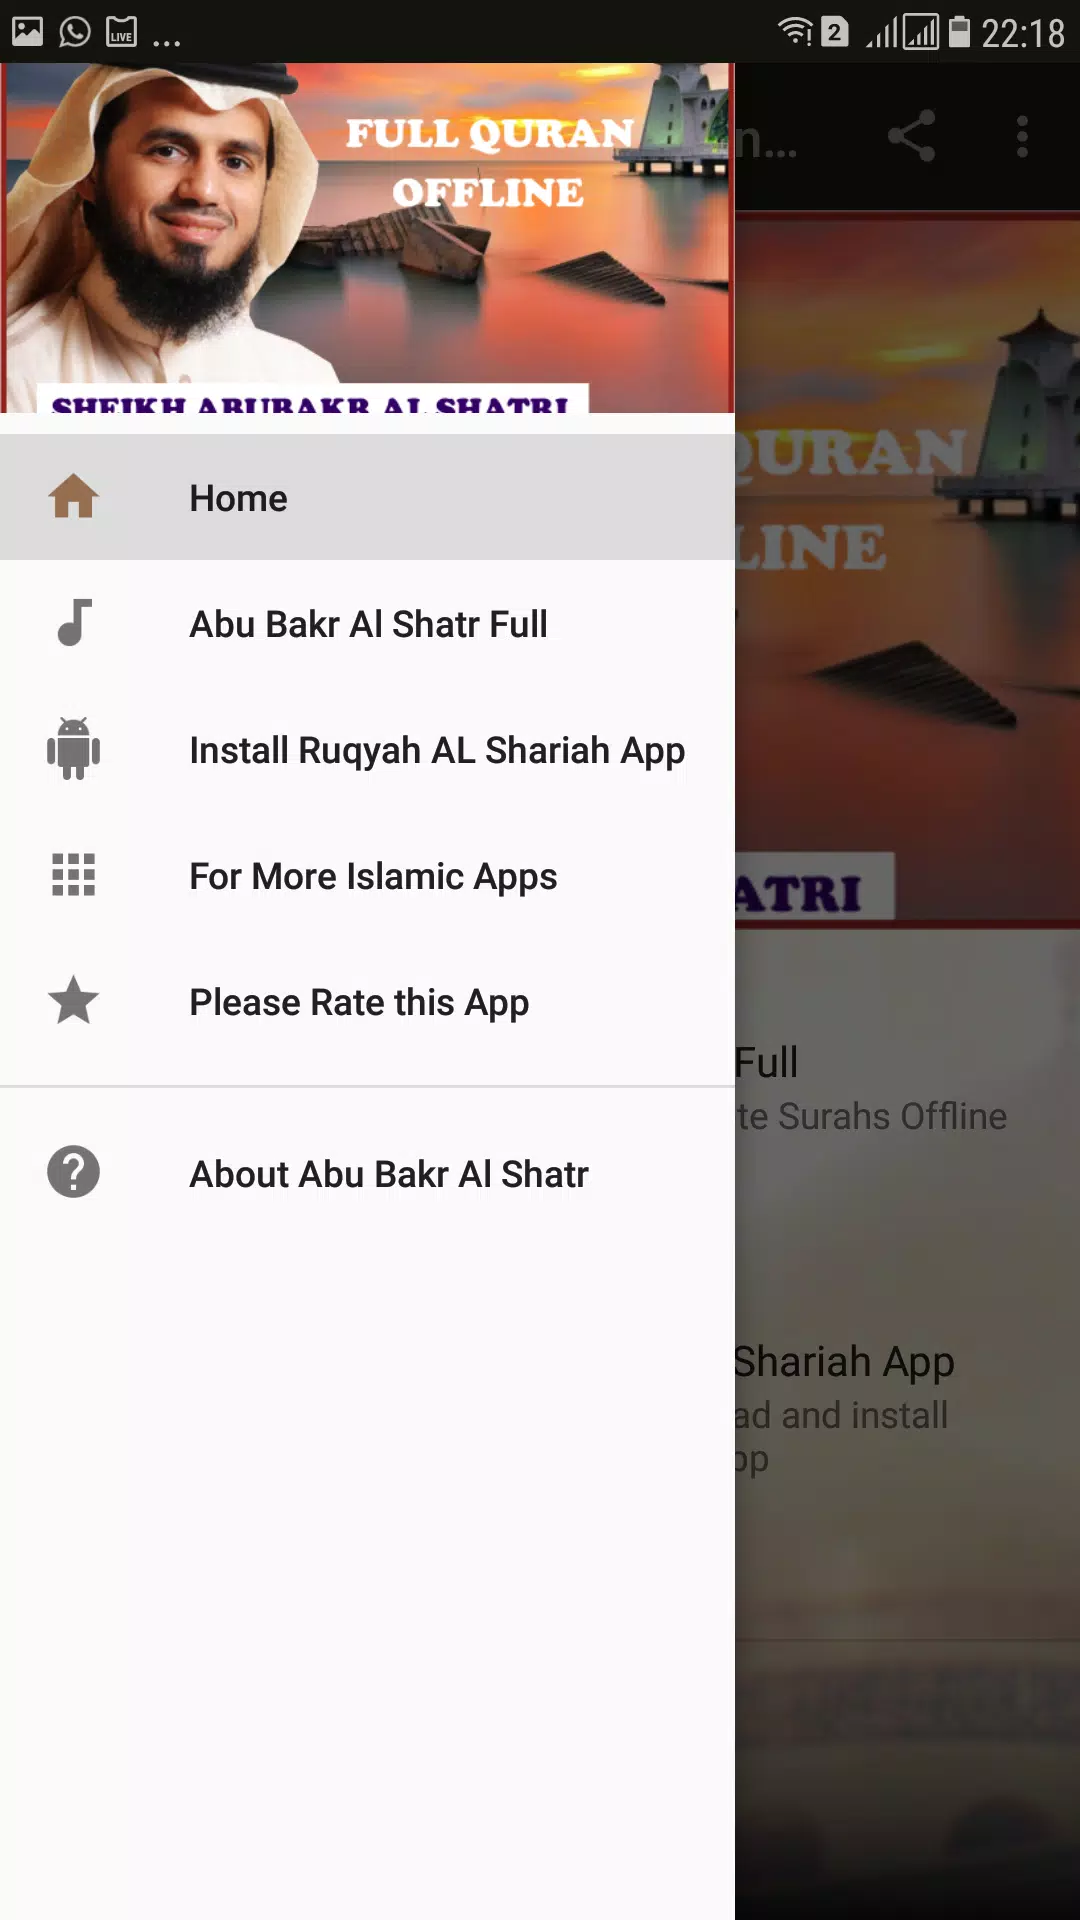 Abu Bakr Al Shatri Quran Offli APK for Android Download